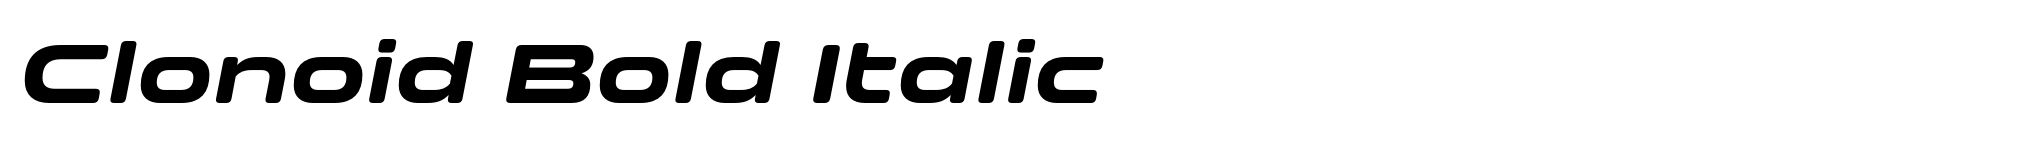 Clonoid Bold Italic image